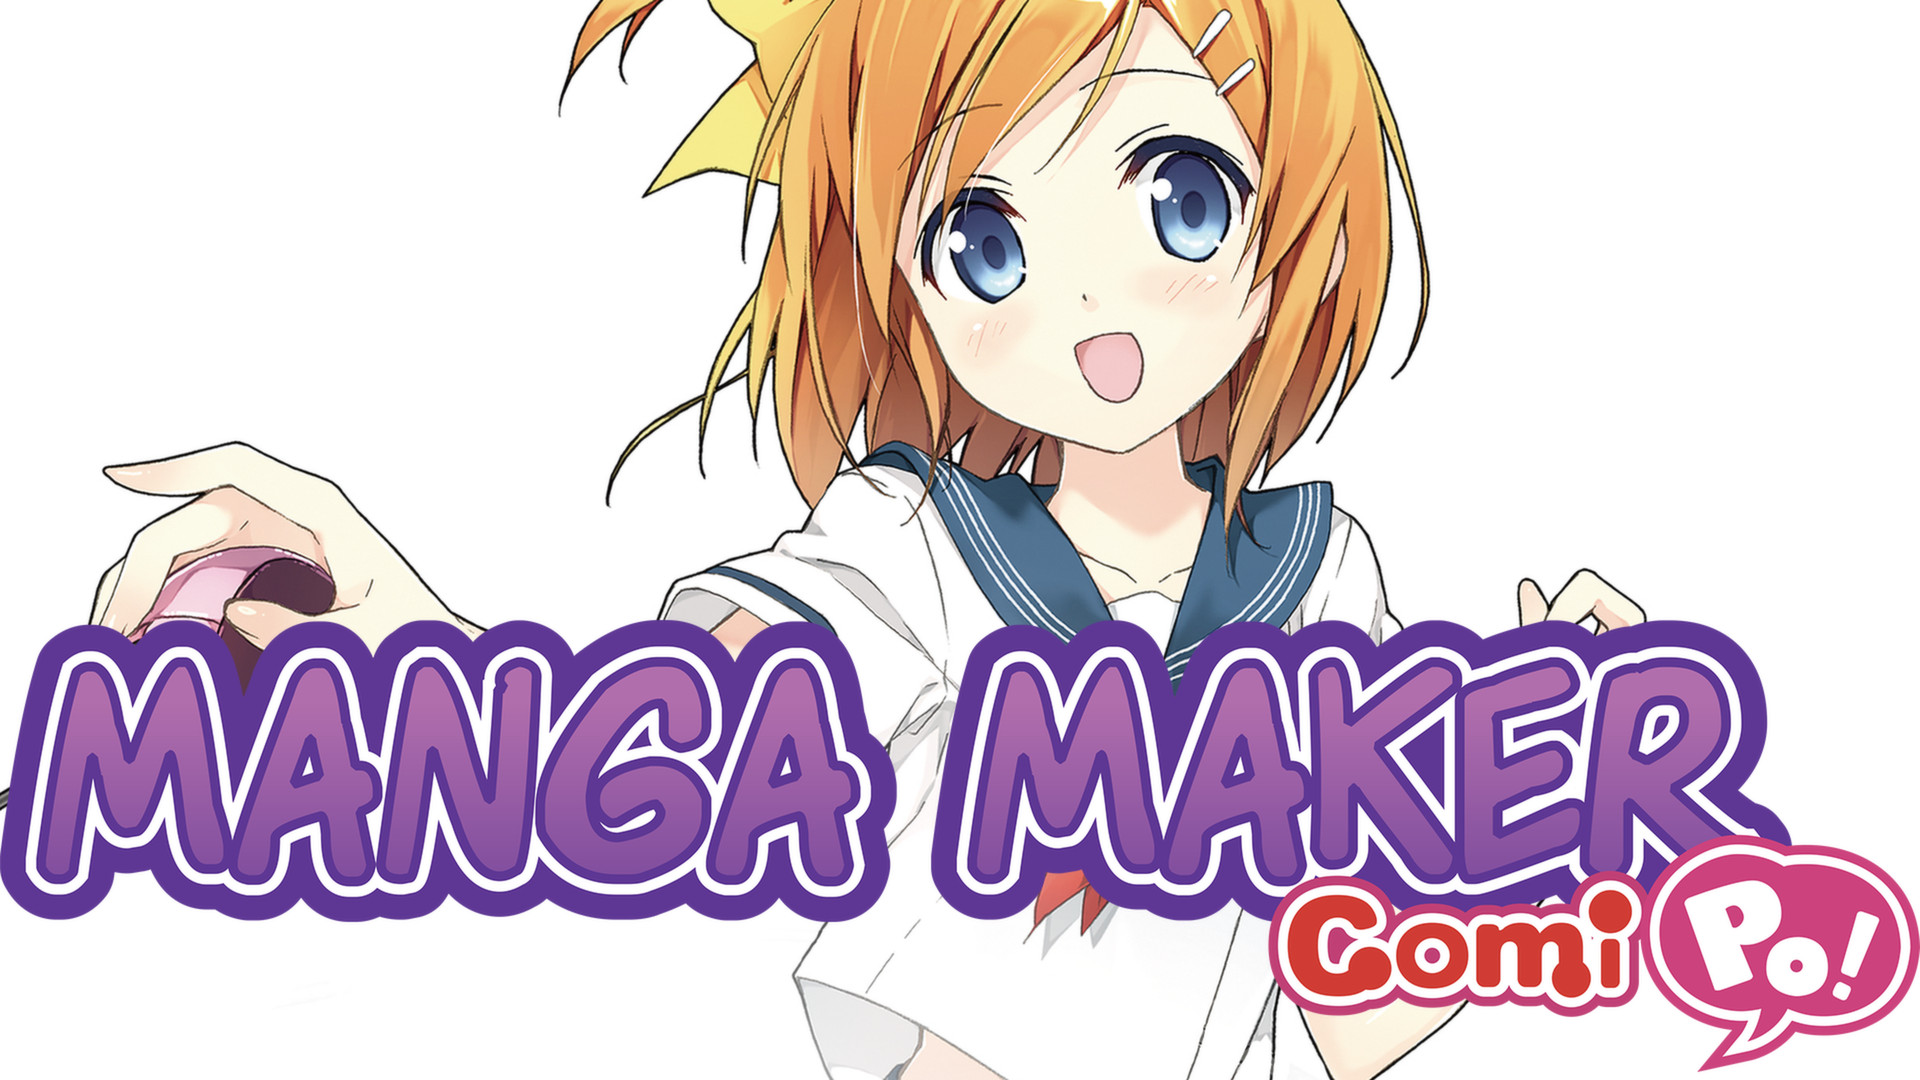 manga maker comipo crack